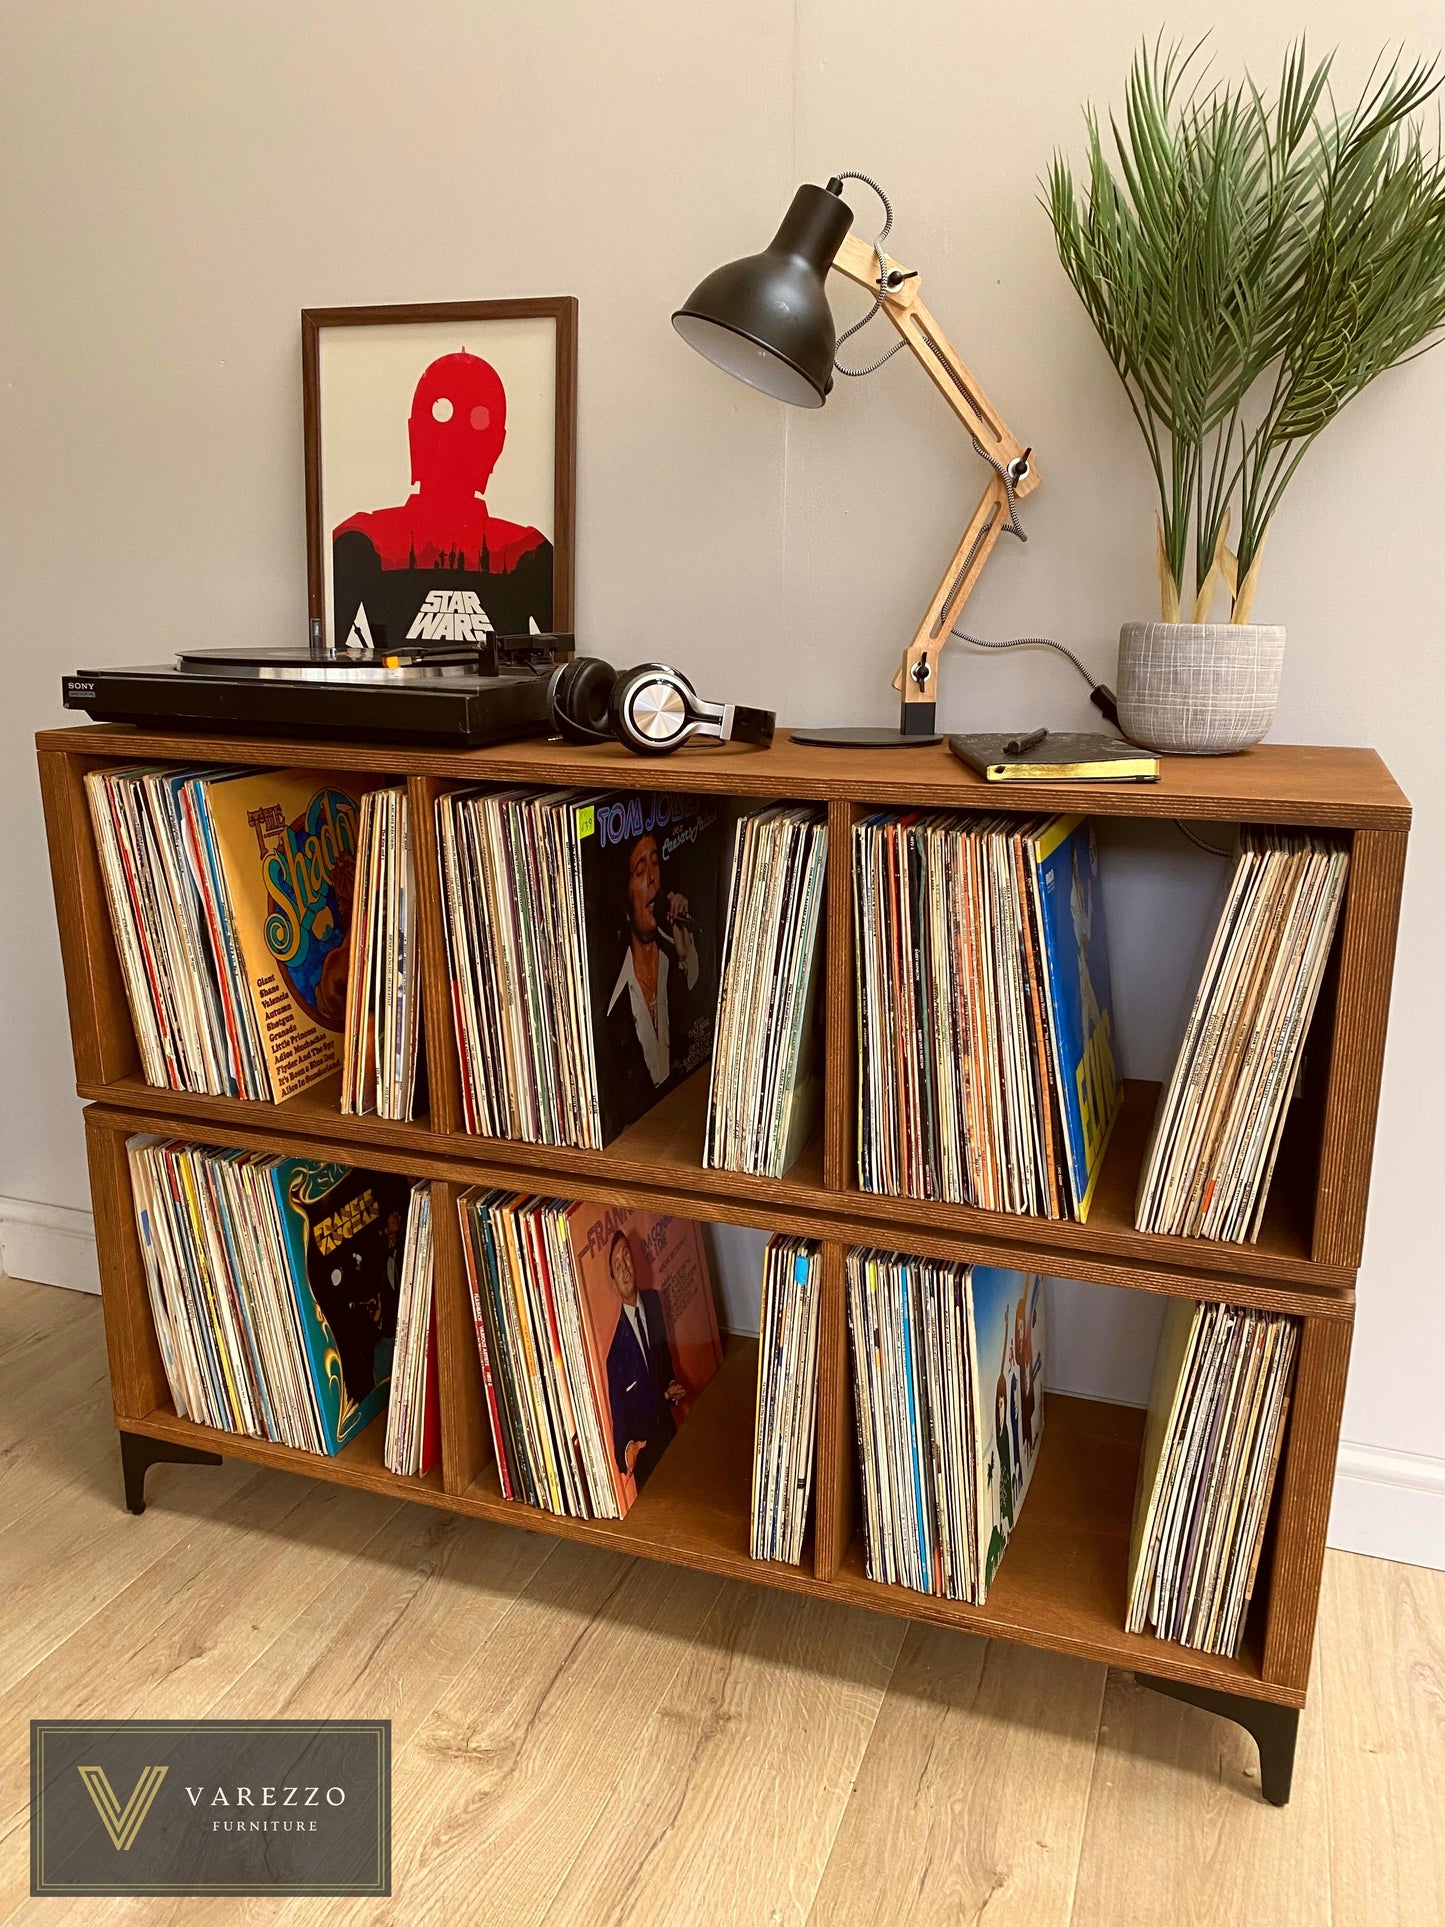 Varezzo Torino | Record Player Stand | Vinyl Record Storage | Turntable Stand